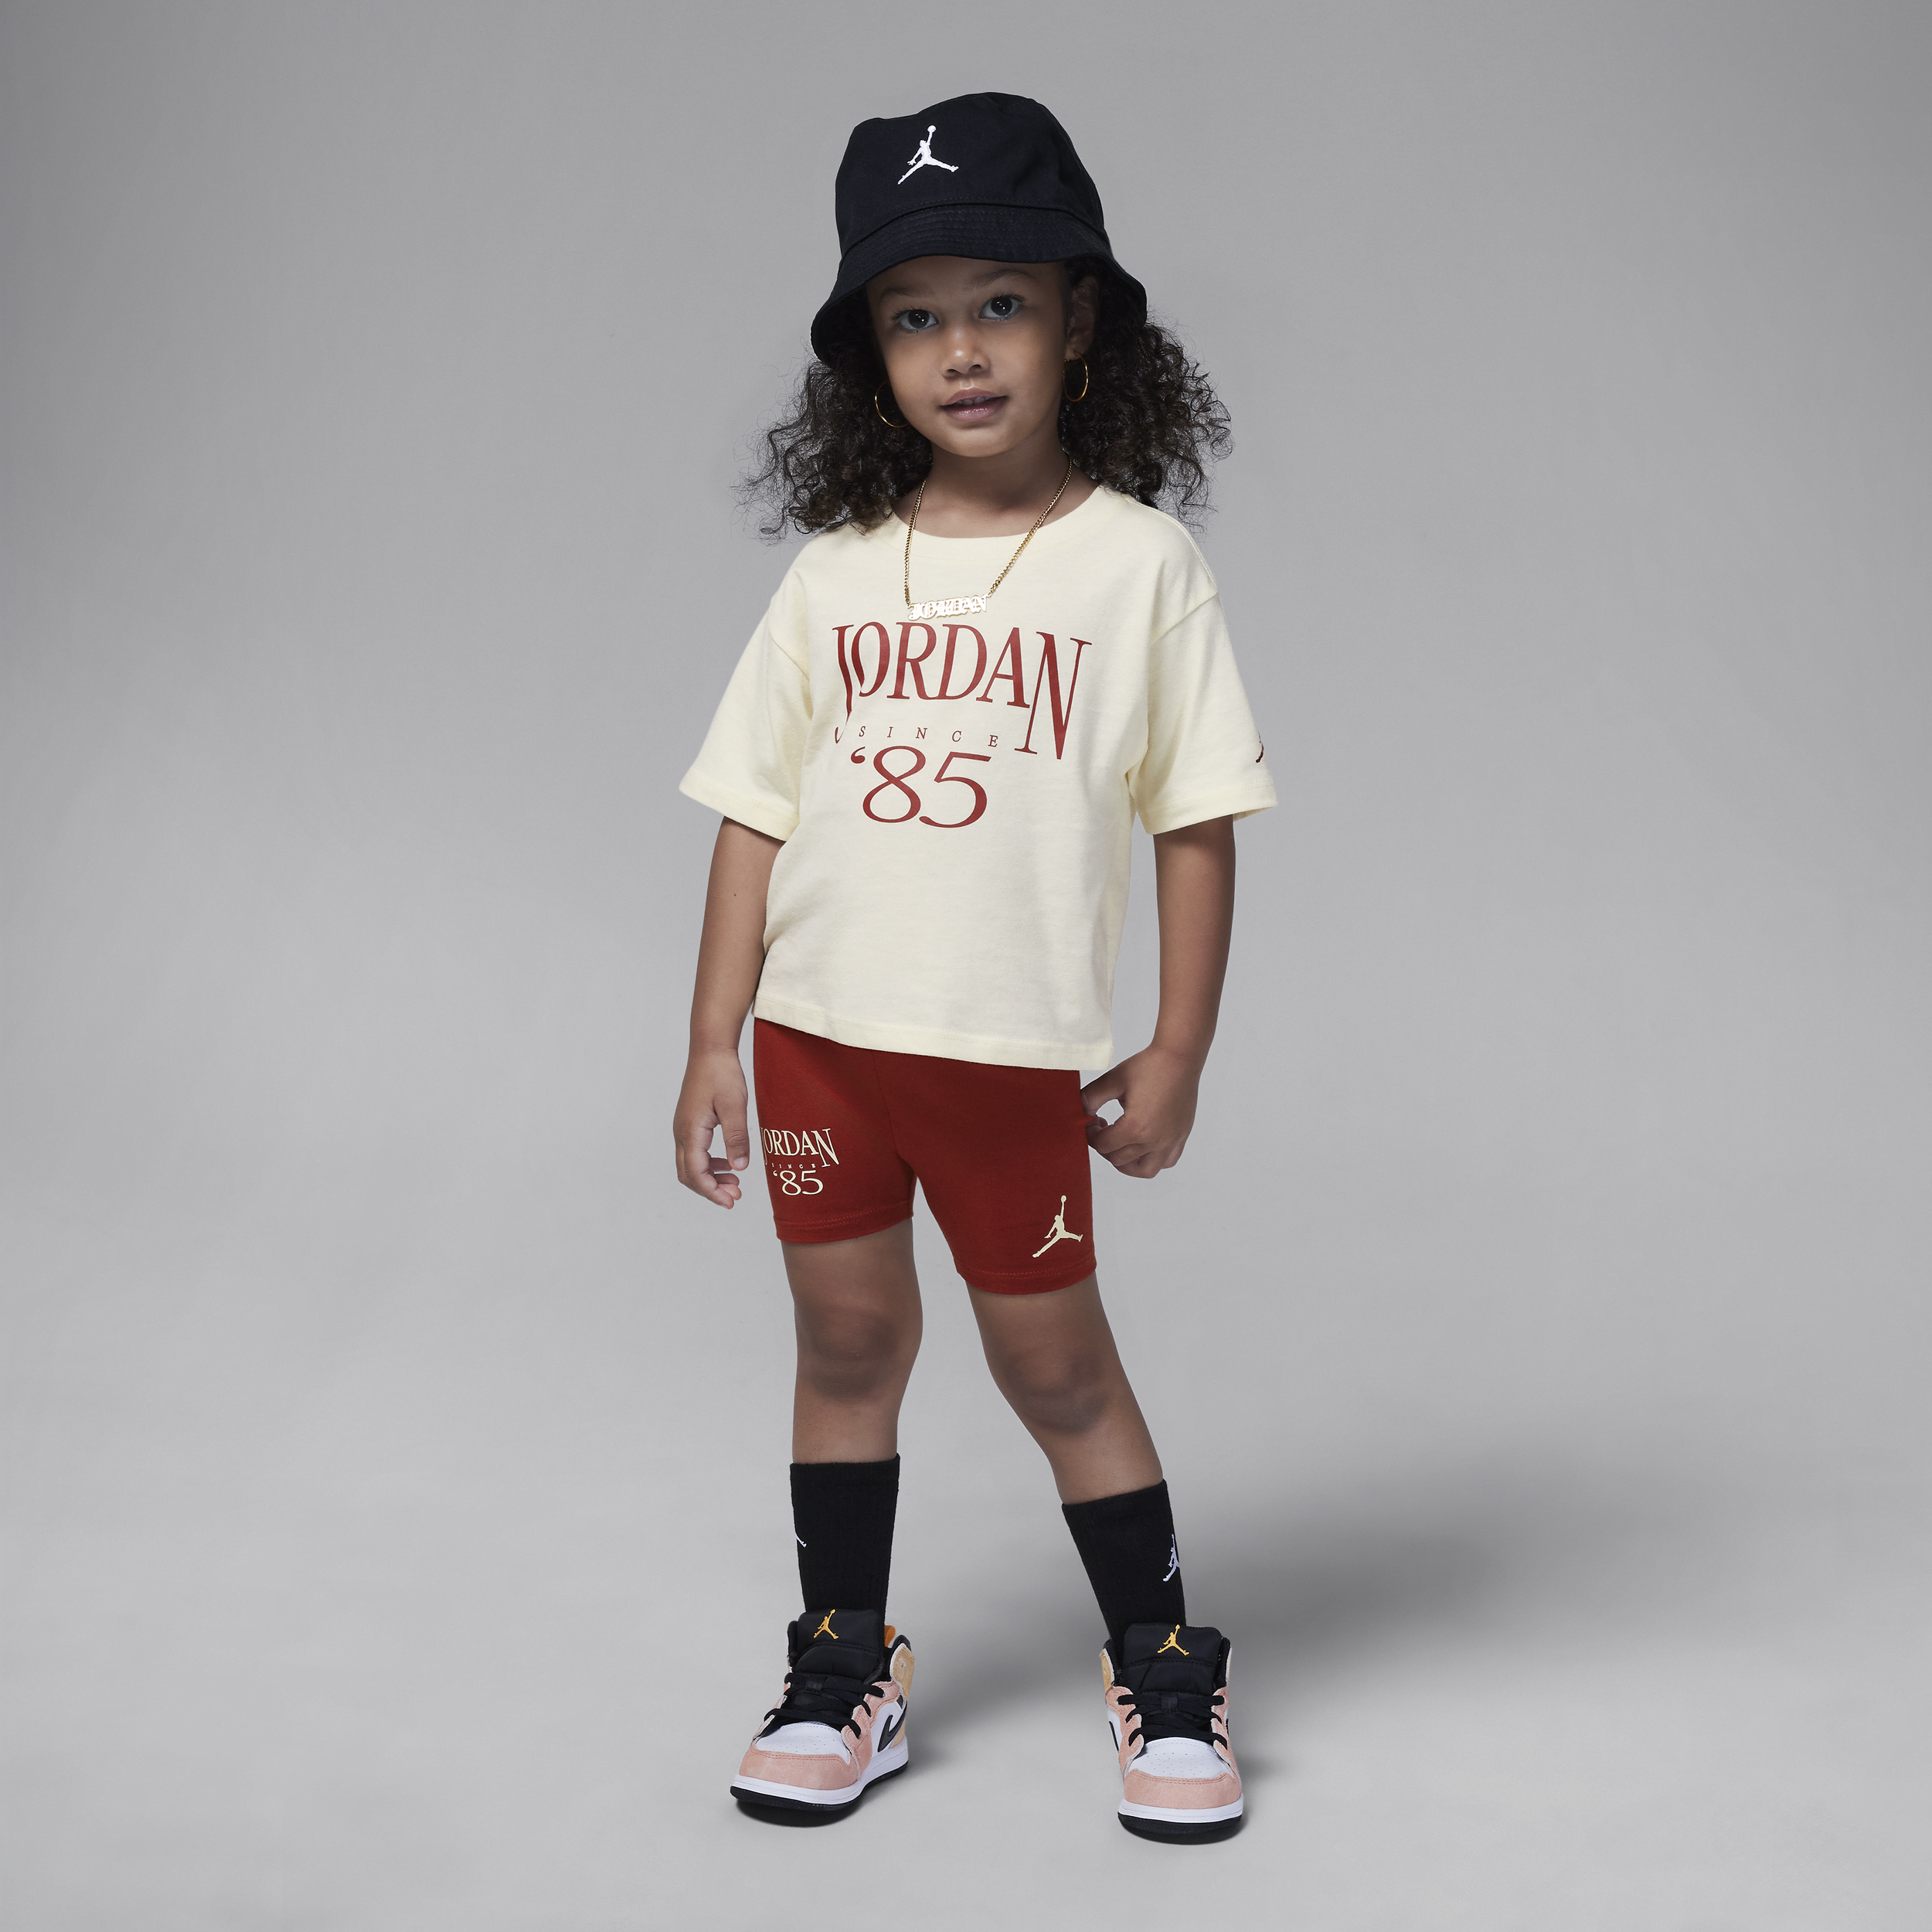 Jordan Babies' Brooklyn Mini Me Toddler Bike Shorts Set In Red